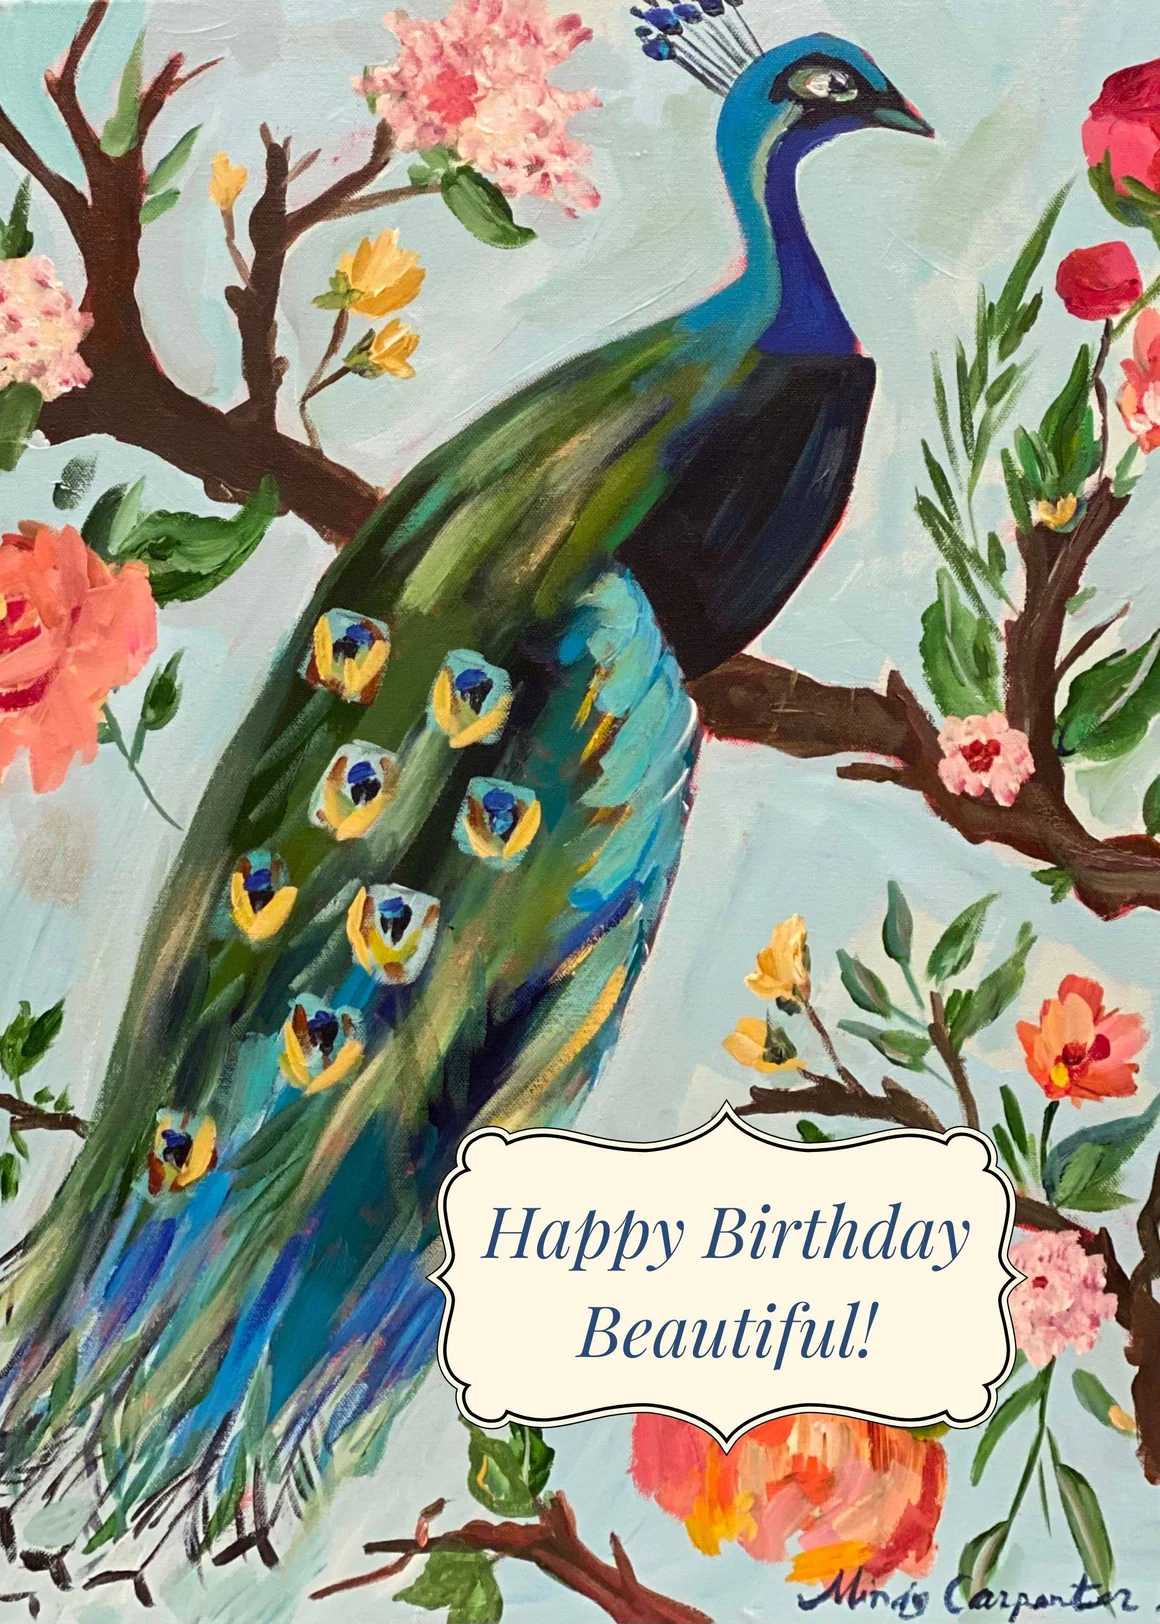 Happy Birthday Peacock Card